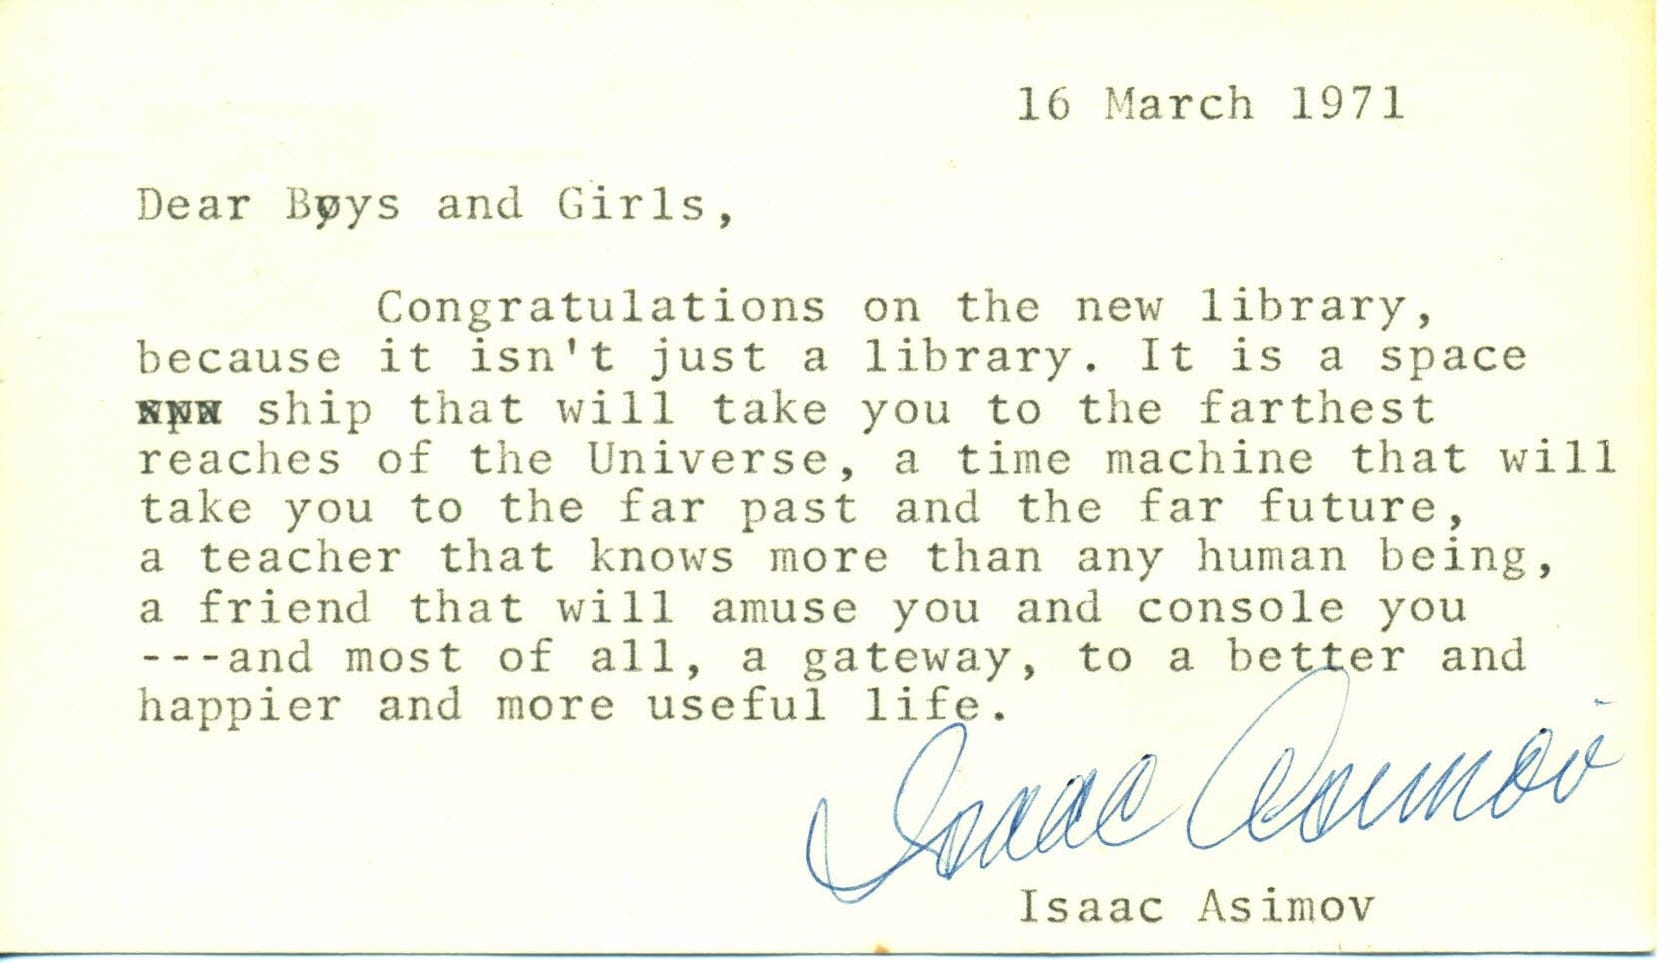 censoring libraries is harmful- Asimov